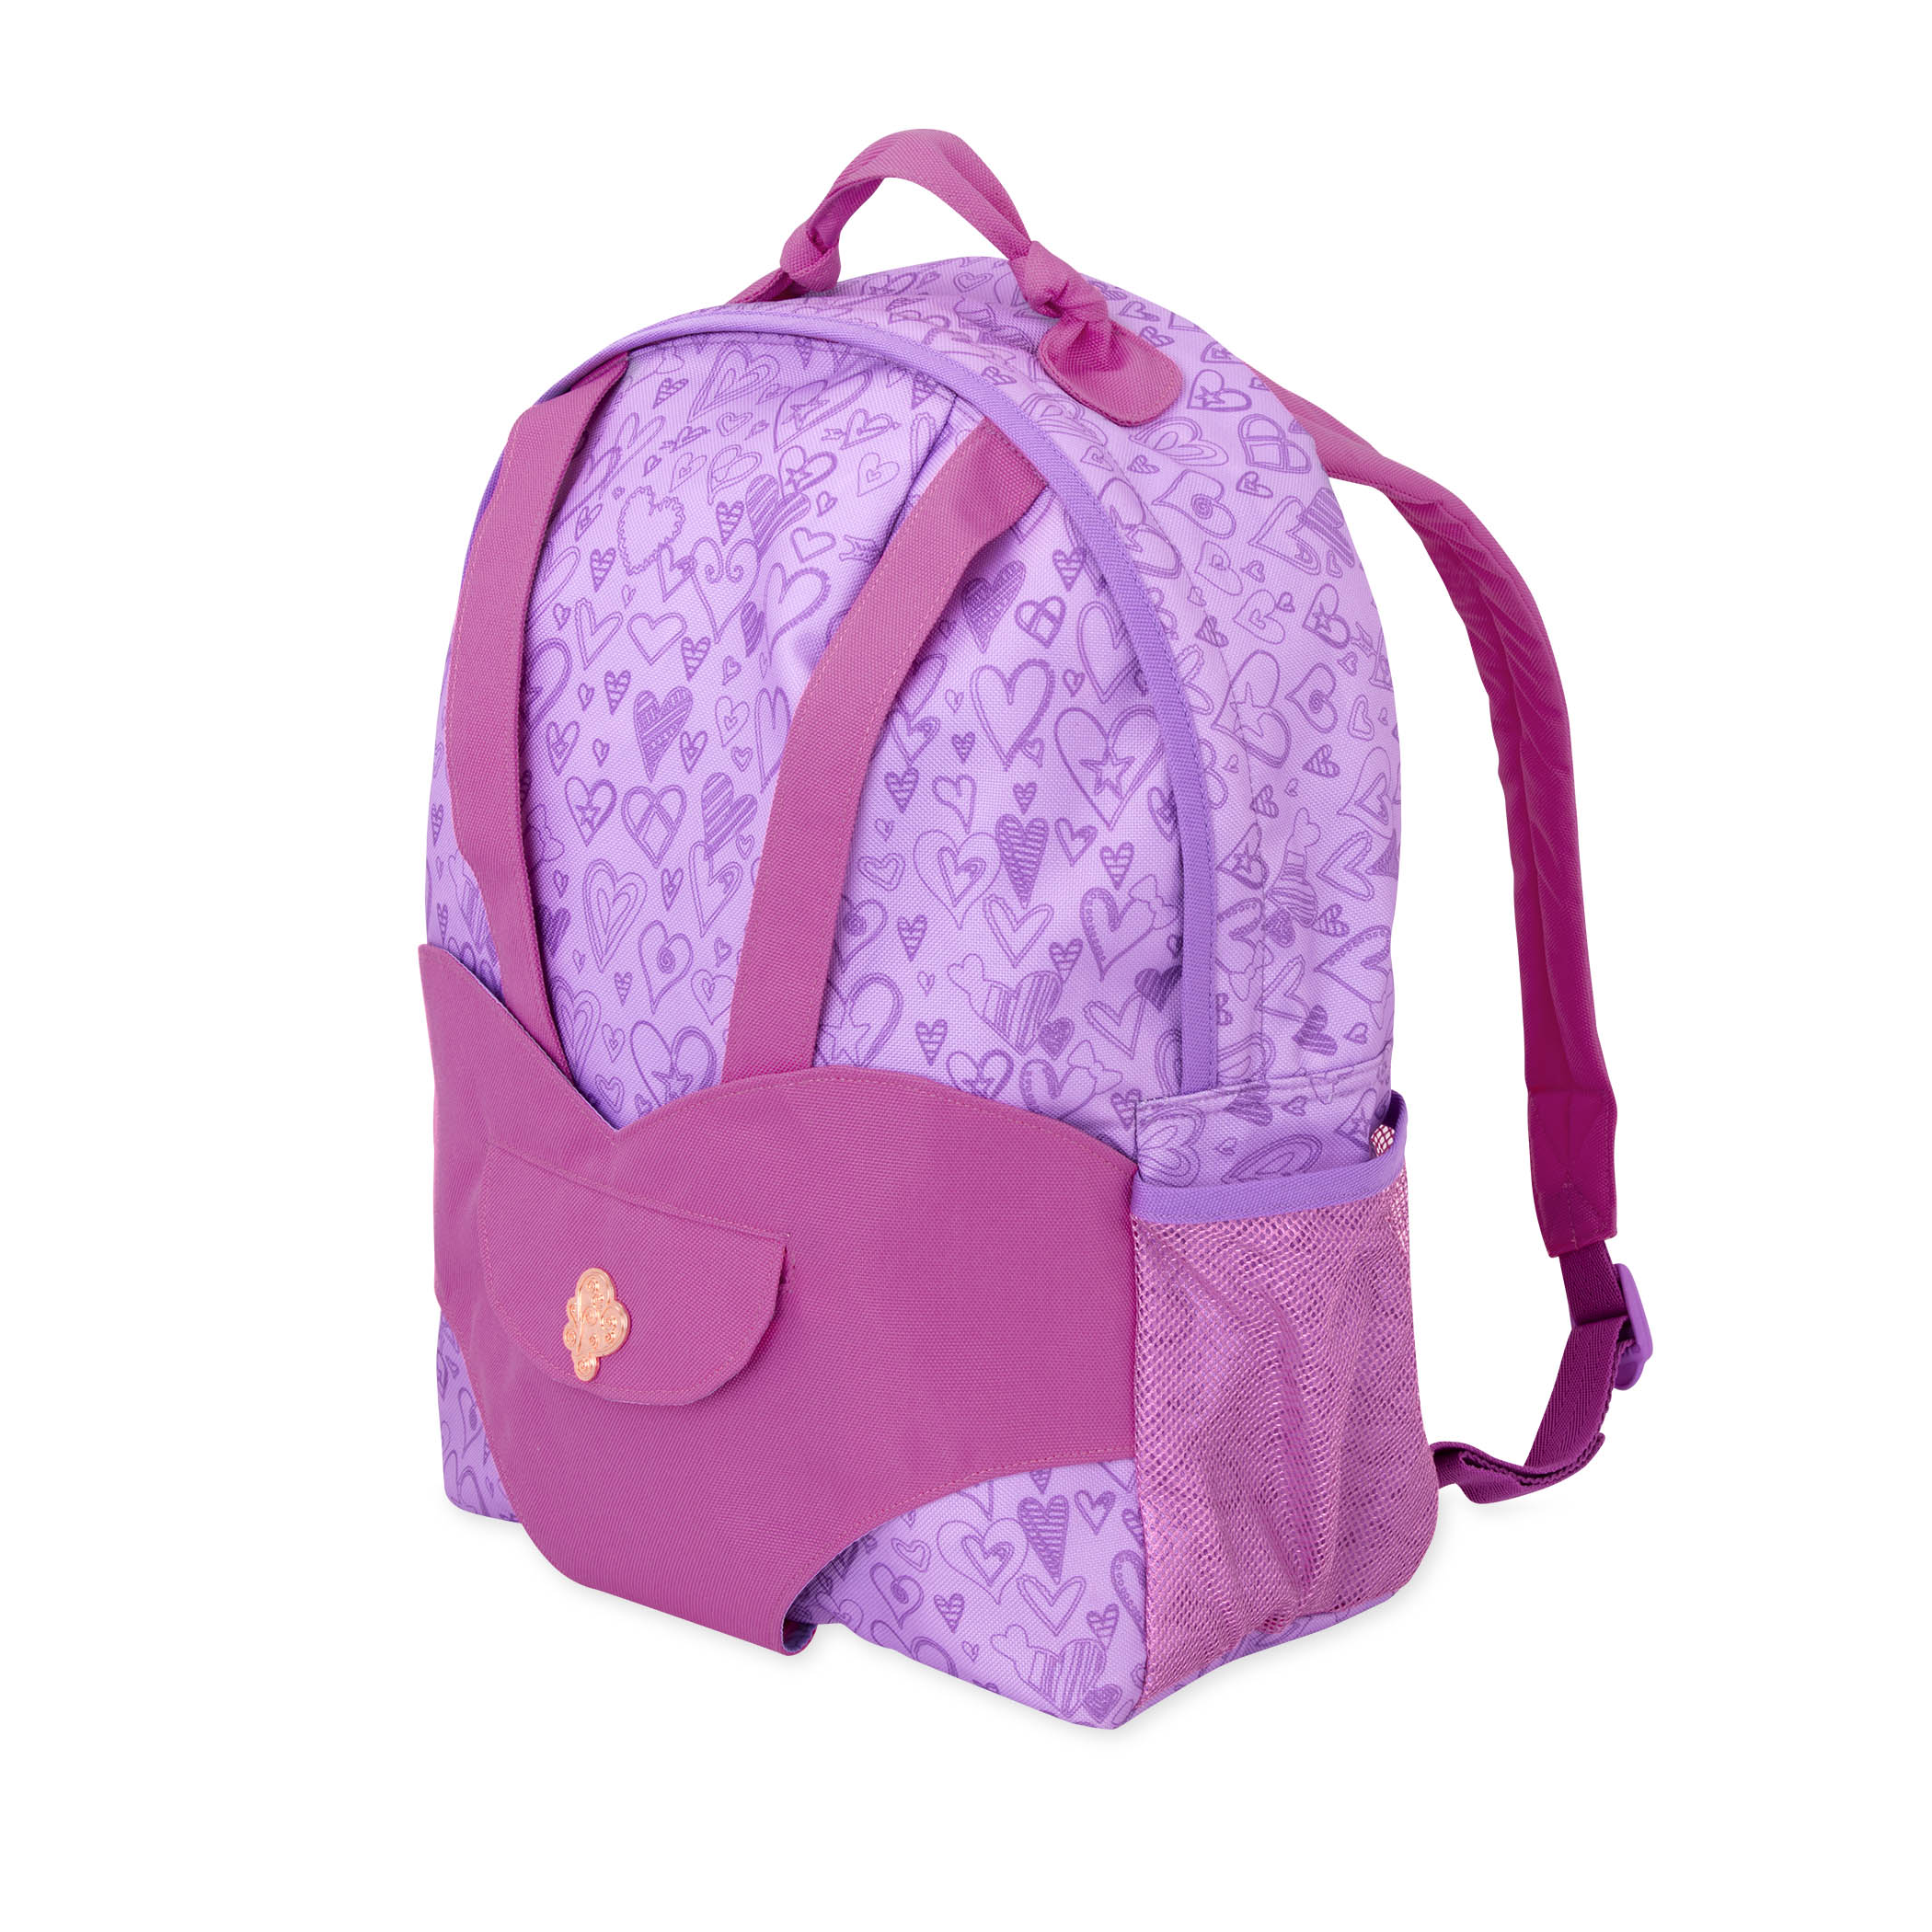 Purple backpack